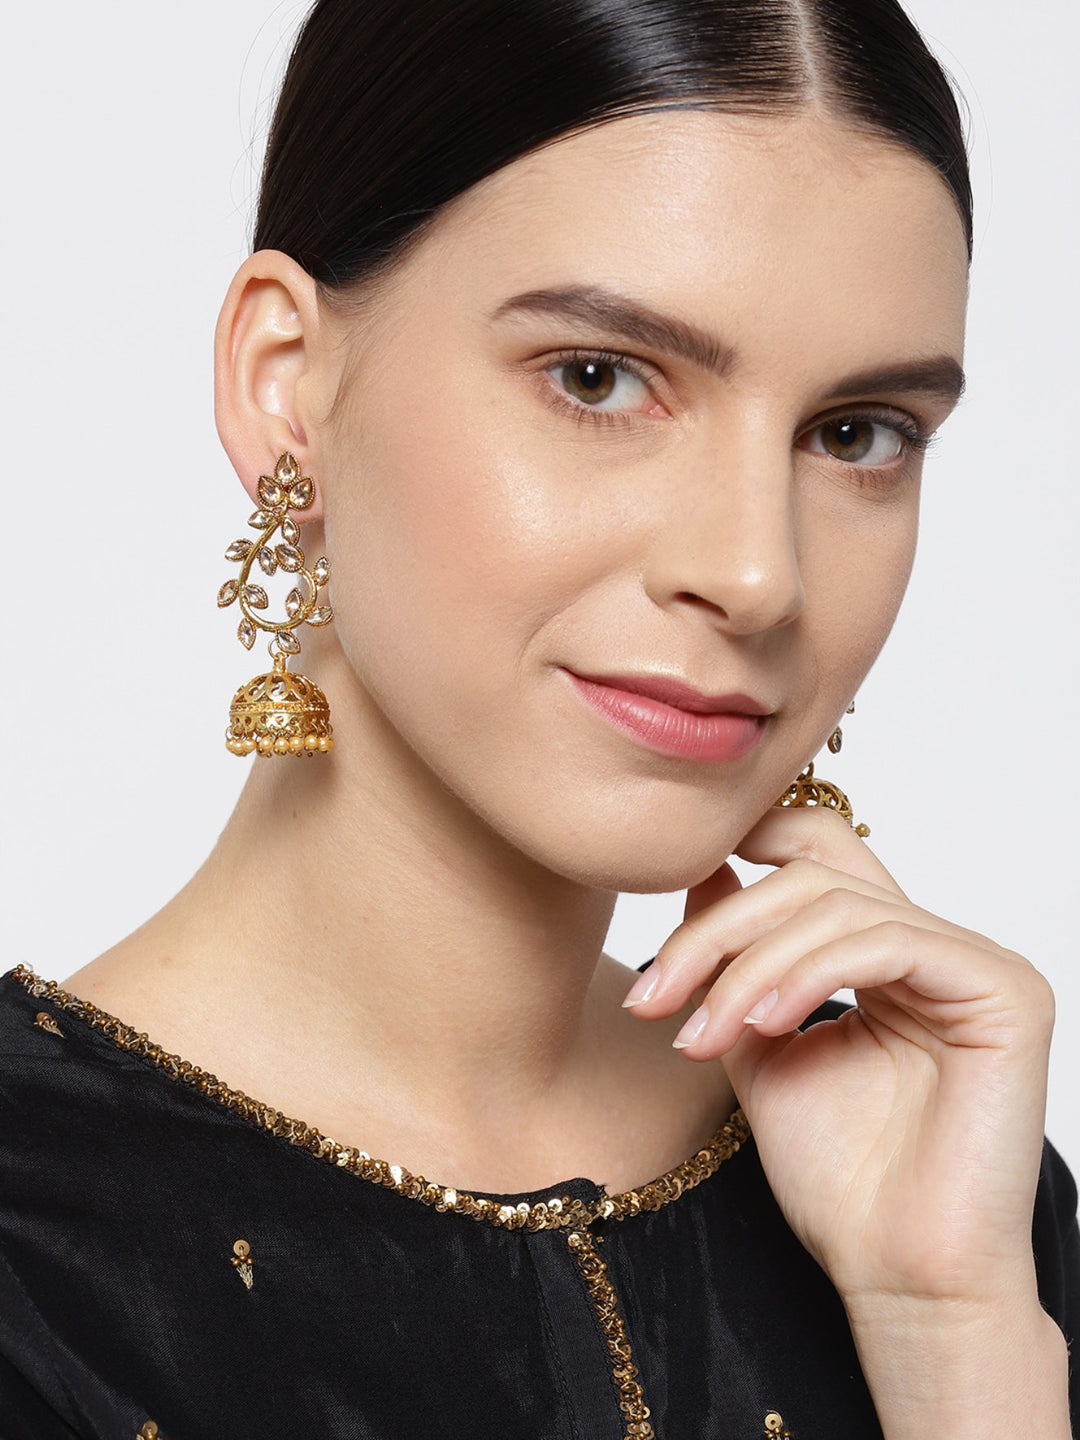 Designer Floral Gold Plated Jhumki Earrings For Women And Girls